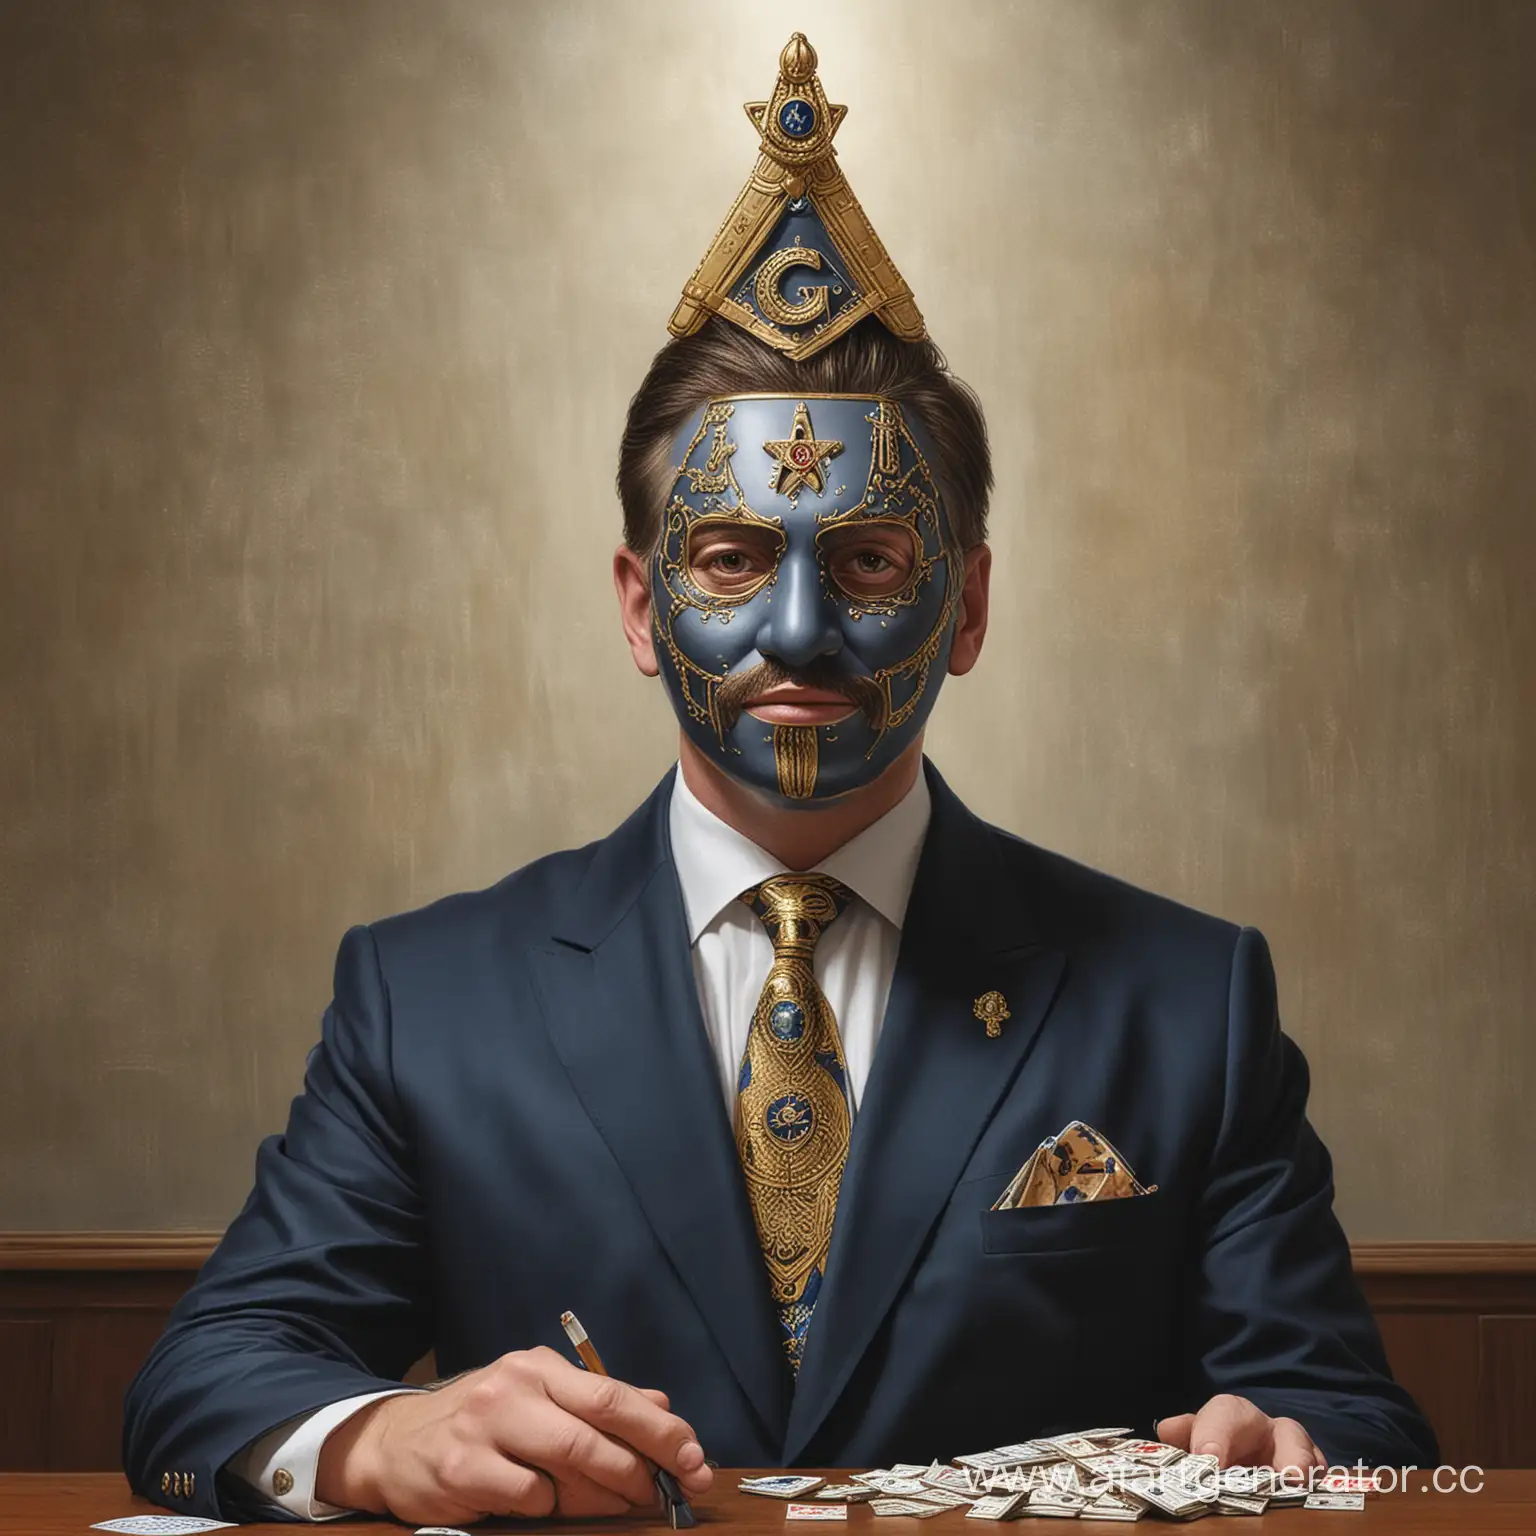 Elite-Freemasons-Secret-Societys-Wealth-and-Control-Unveiled